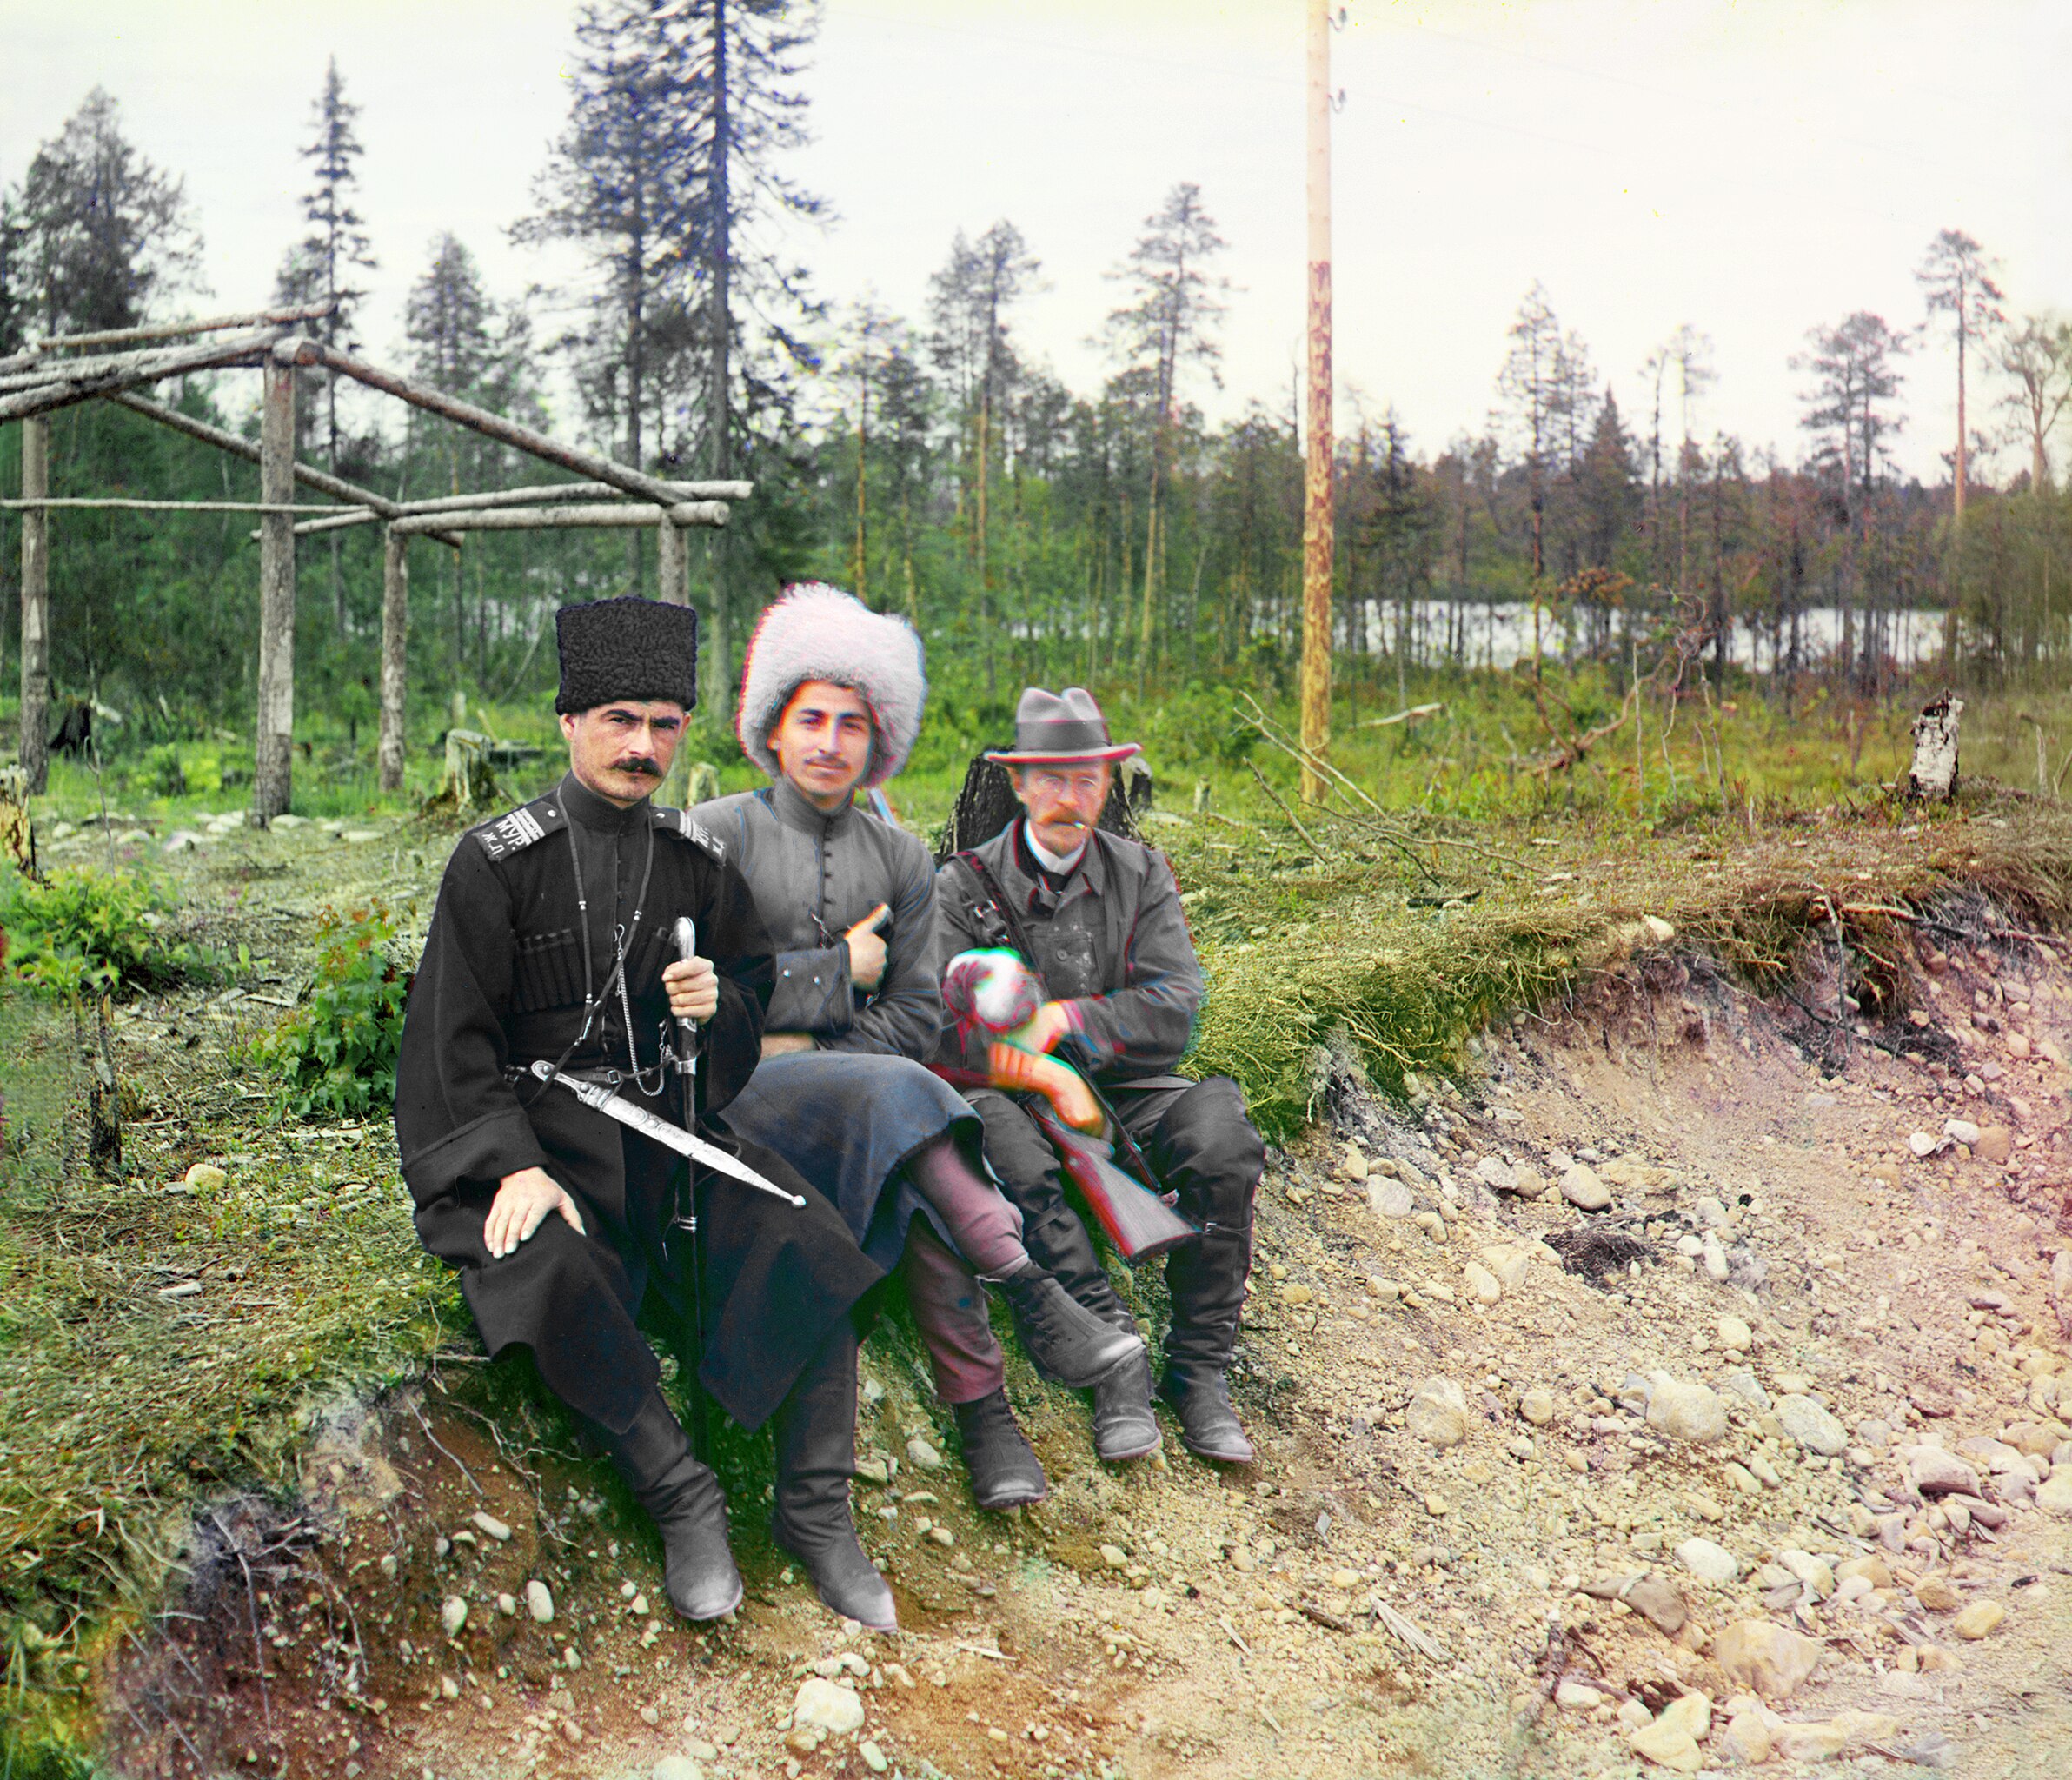 File:Sergei Prokudin-Gorskii and two men in Cossack clothes, Murmansk 1916  (by Sergei Prokudin-Gorskii).jpg - Wikimedia Commons